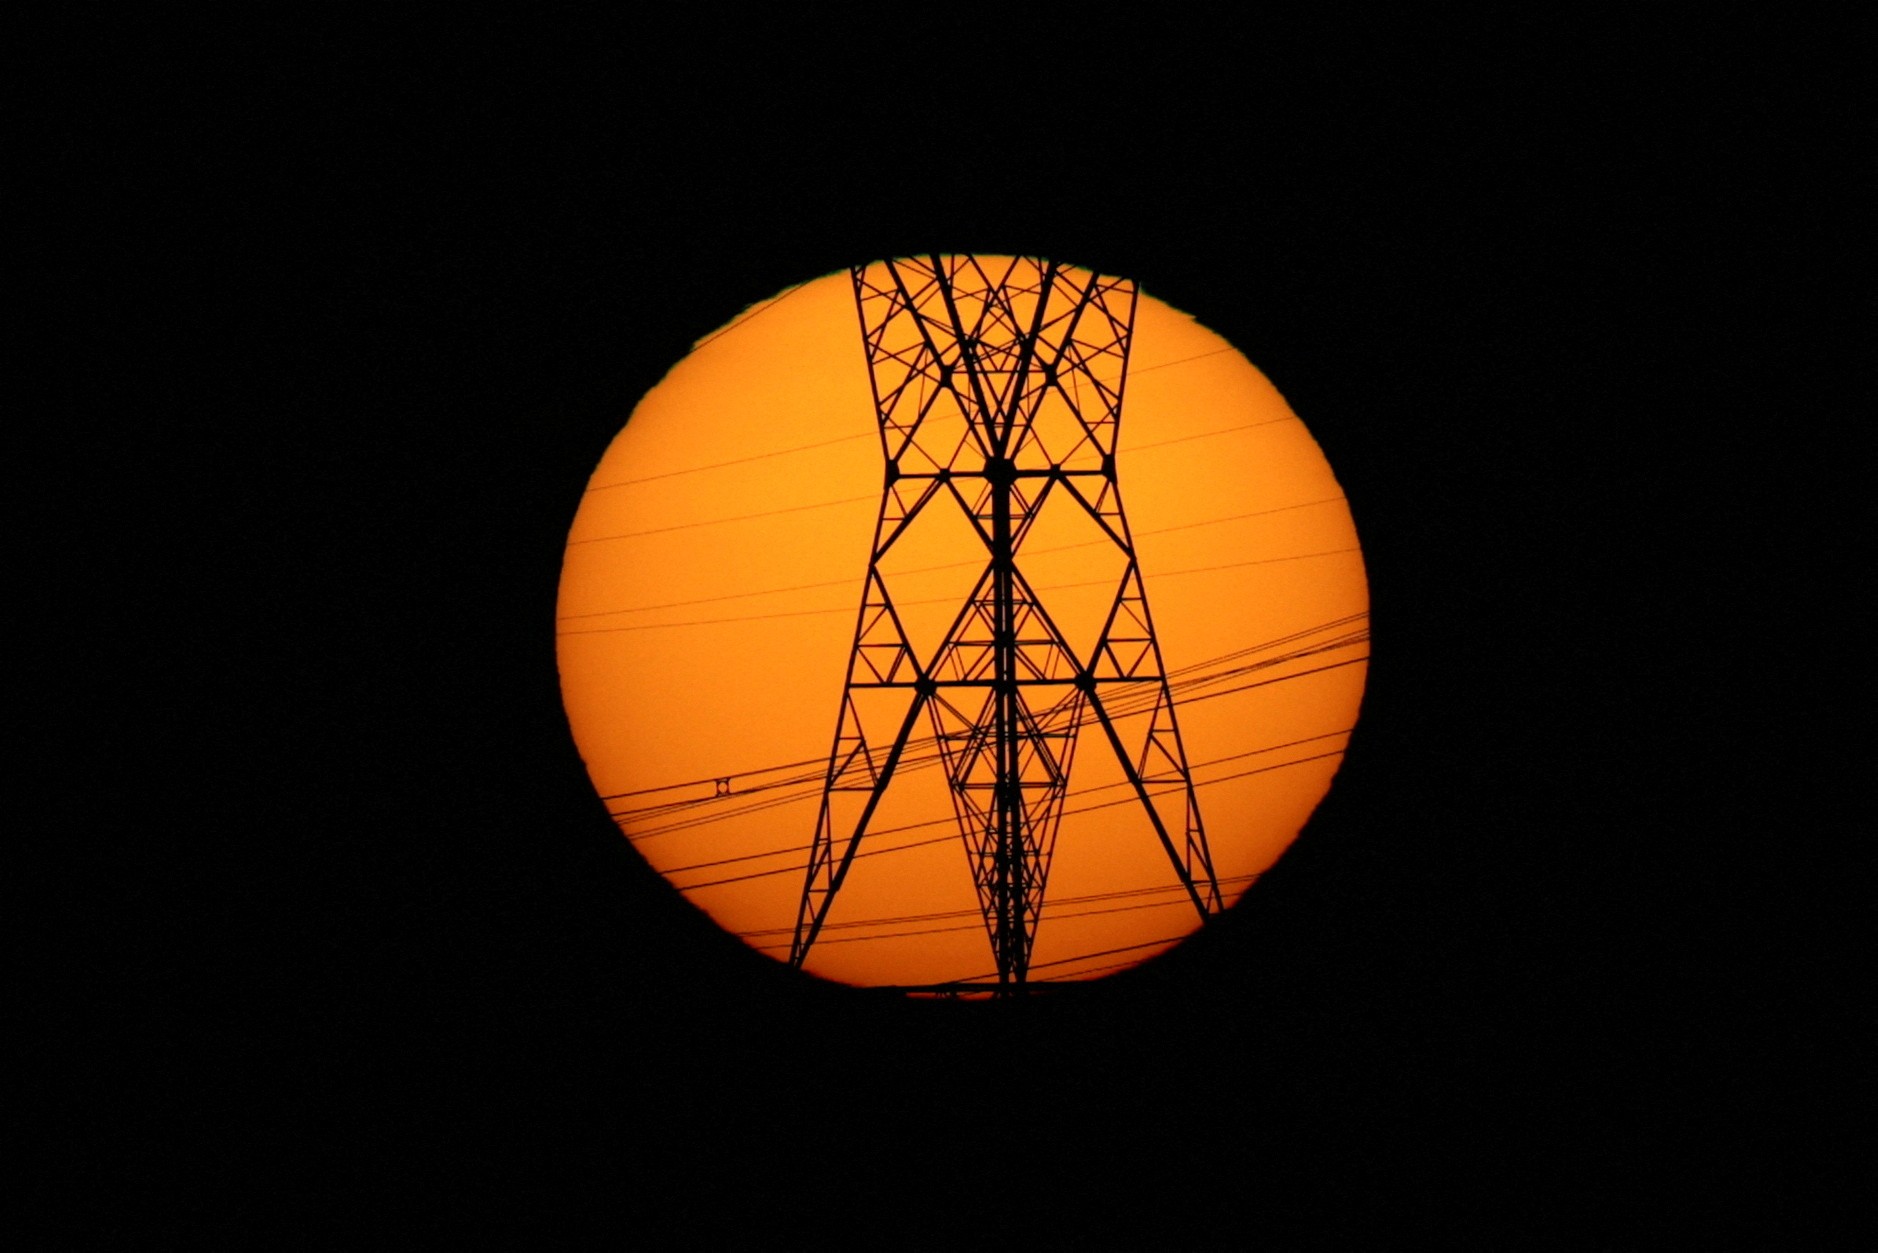 Torres de transmissão de energia elétrica durante o pôr-do-sol em Brasília (DF) (Foto: REUTERS/Ueslei Marcelino)